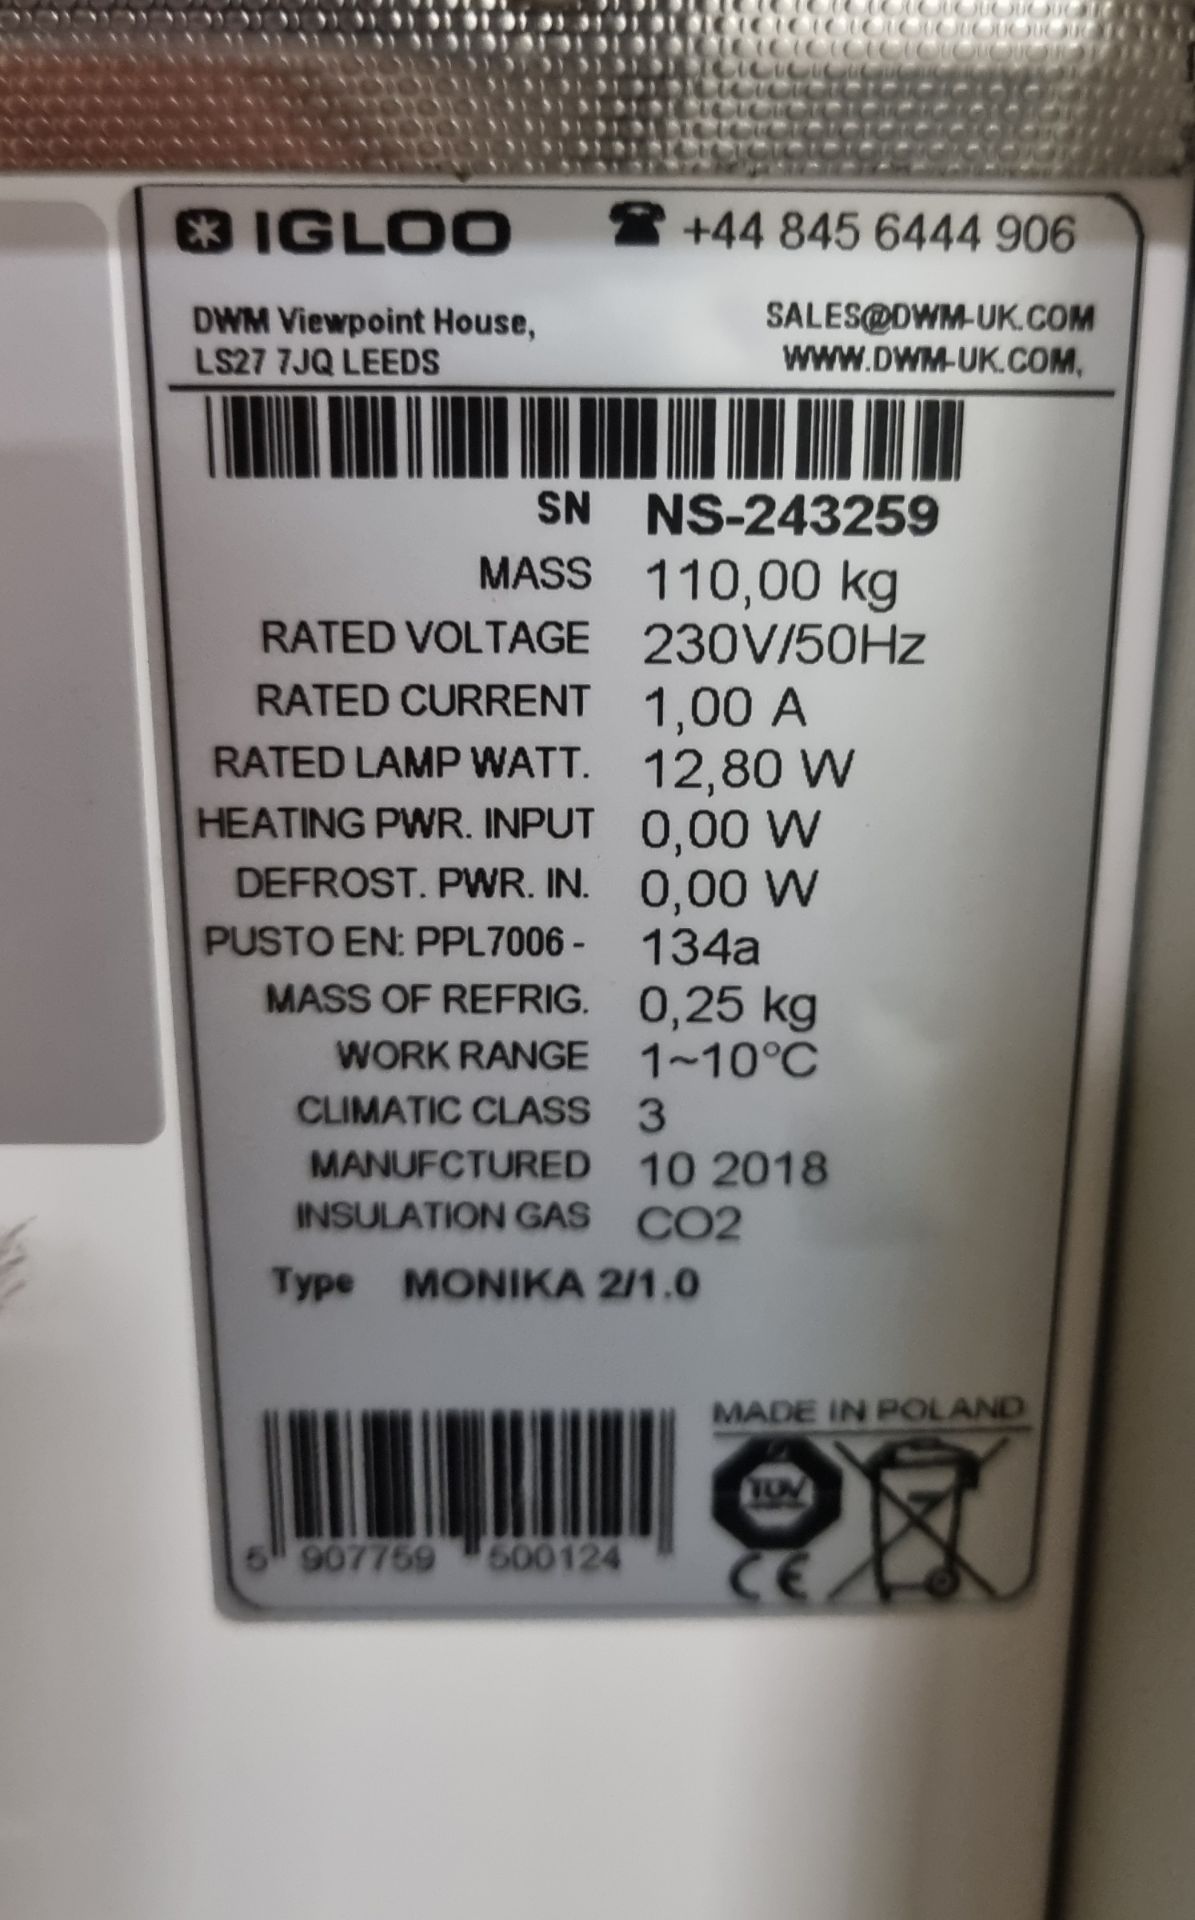 Igloo Monika 2/1.0 Refrigerated Display Counter 110 x 85 x 125 cm - Image 5 of 6